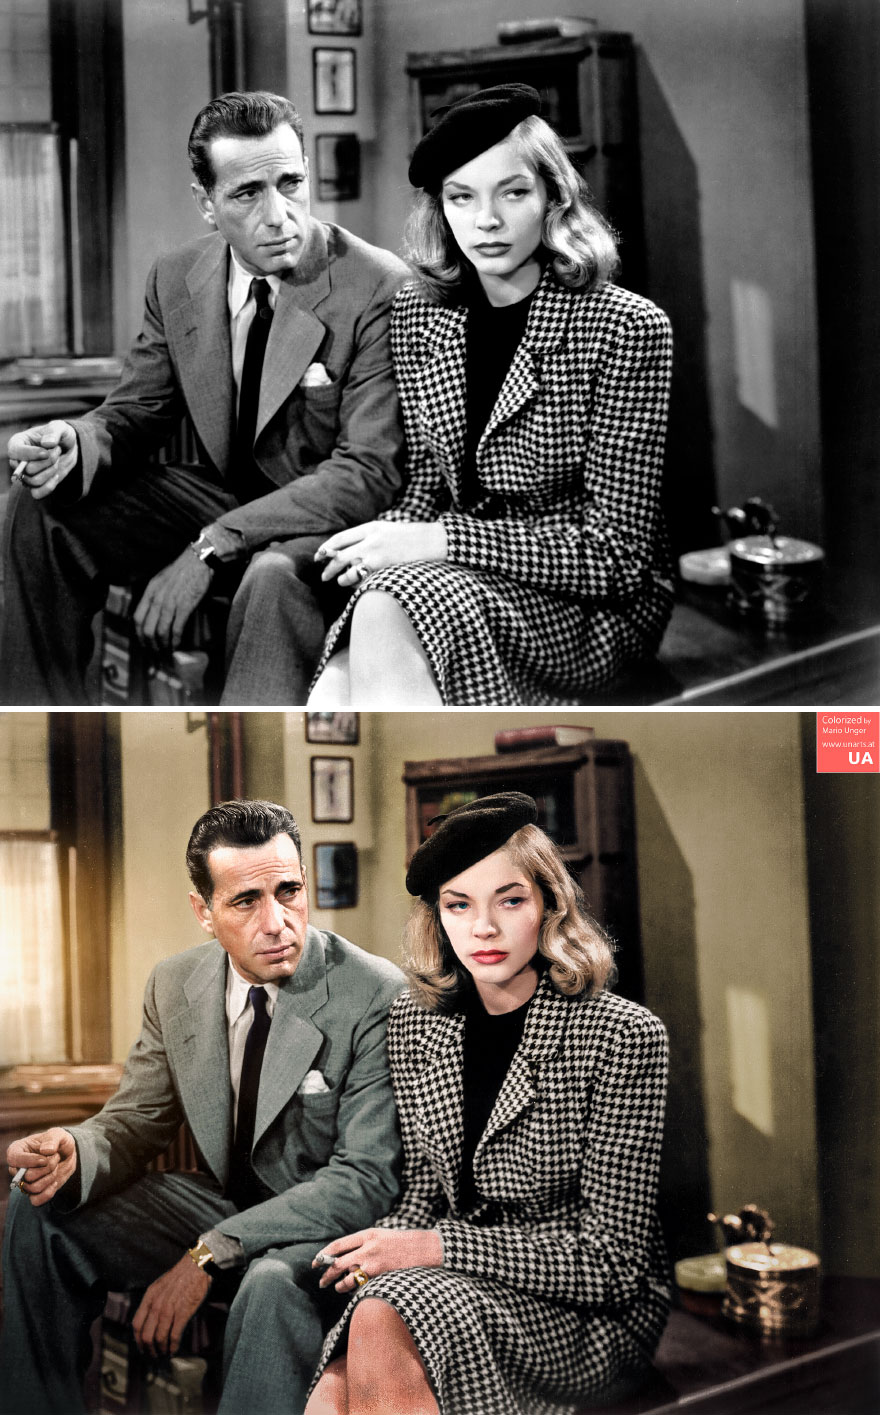 Lauren Bacall And Humphrey Bogart In "The Big Sleep", 1946